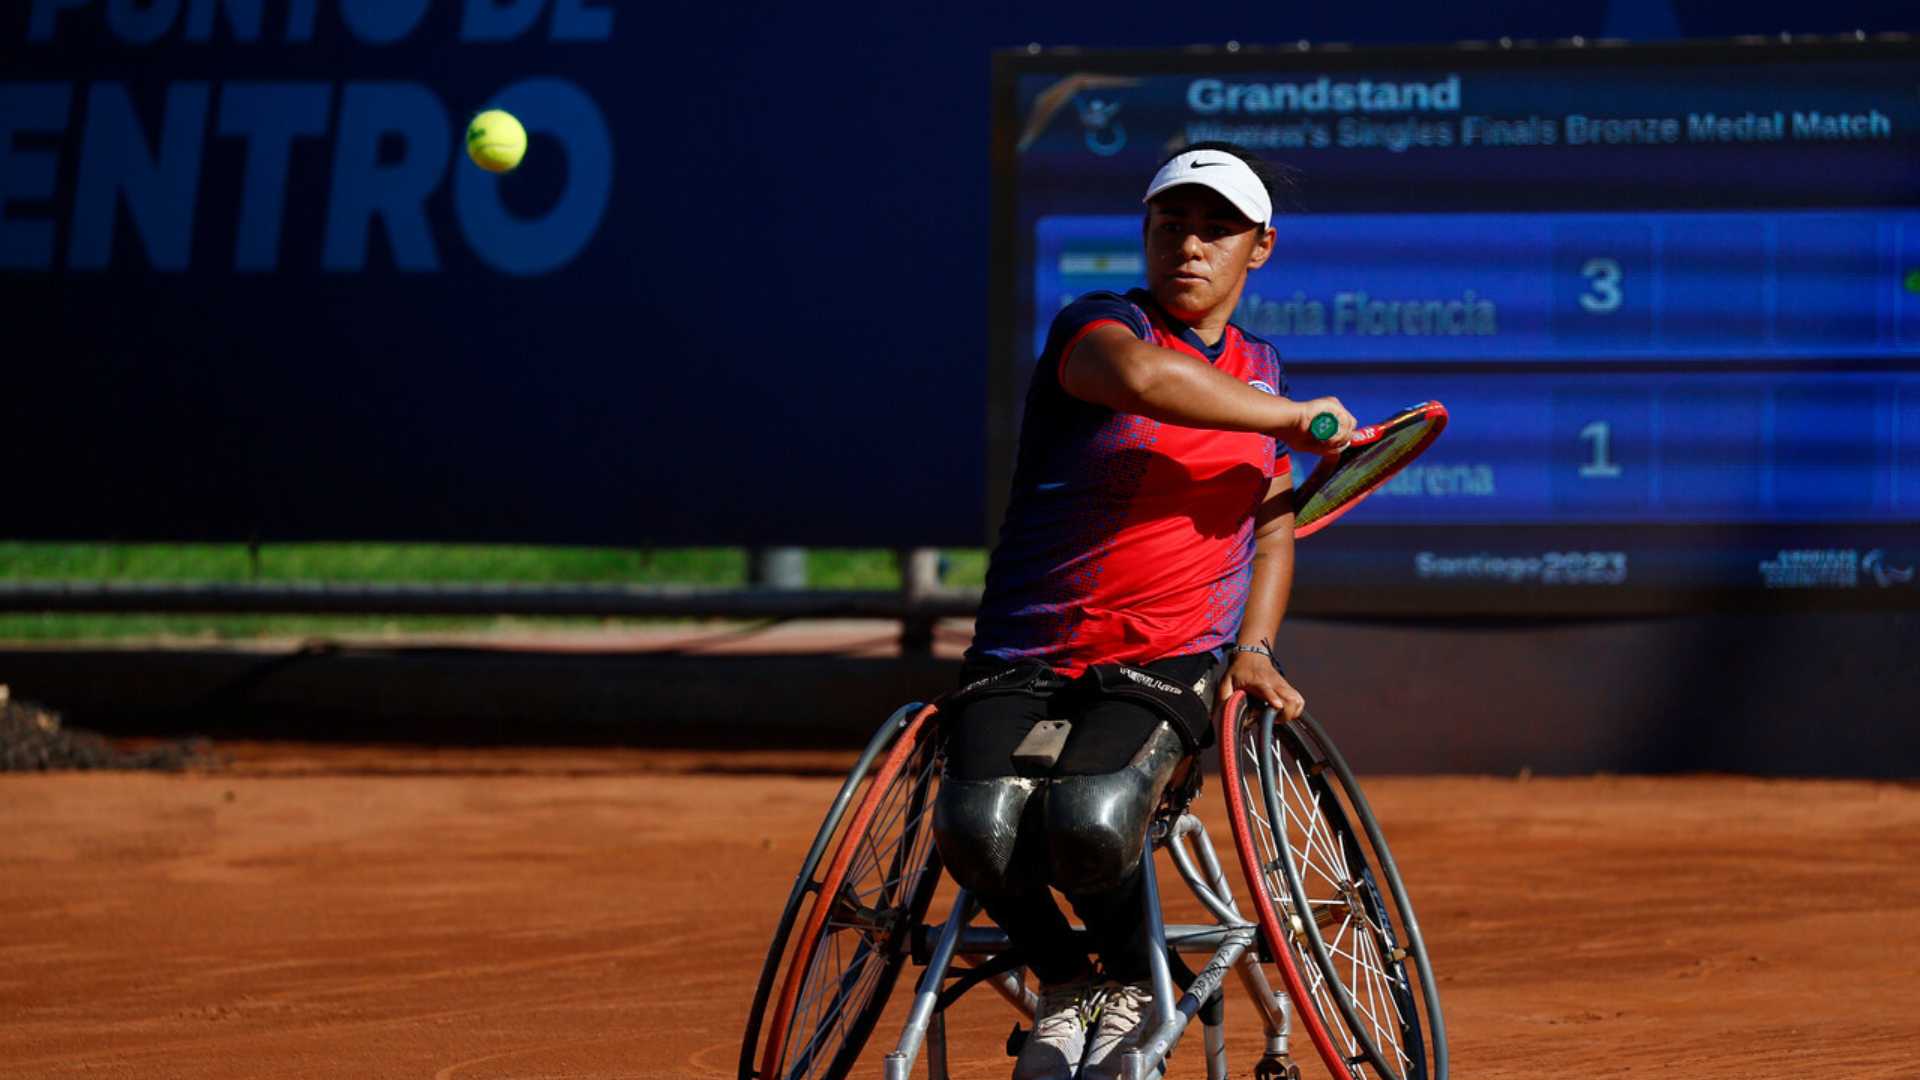 Macarena Cabrillana Wins Emotional Bronze Medal in Tennis